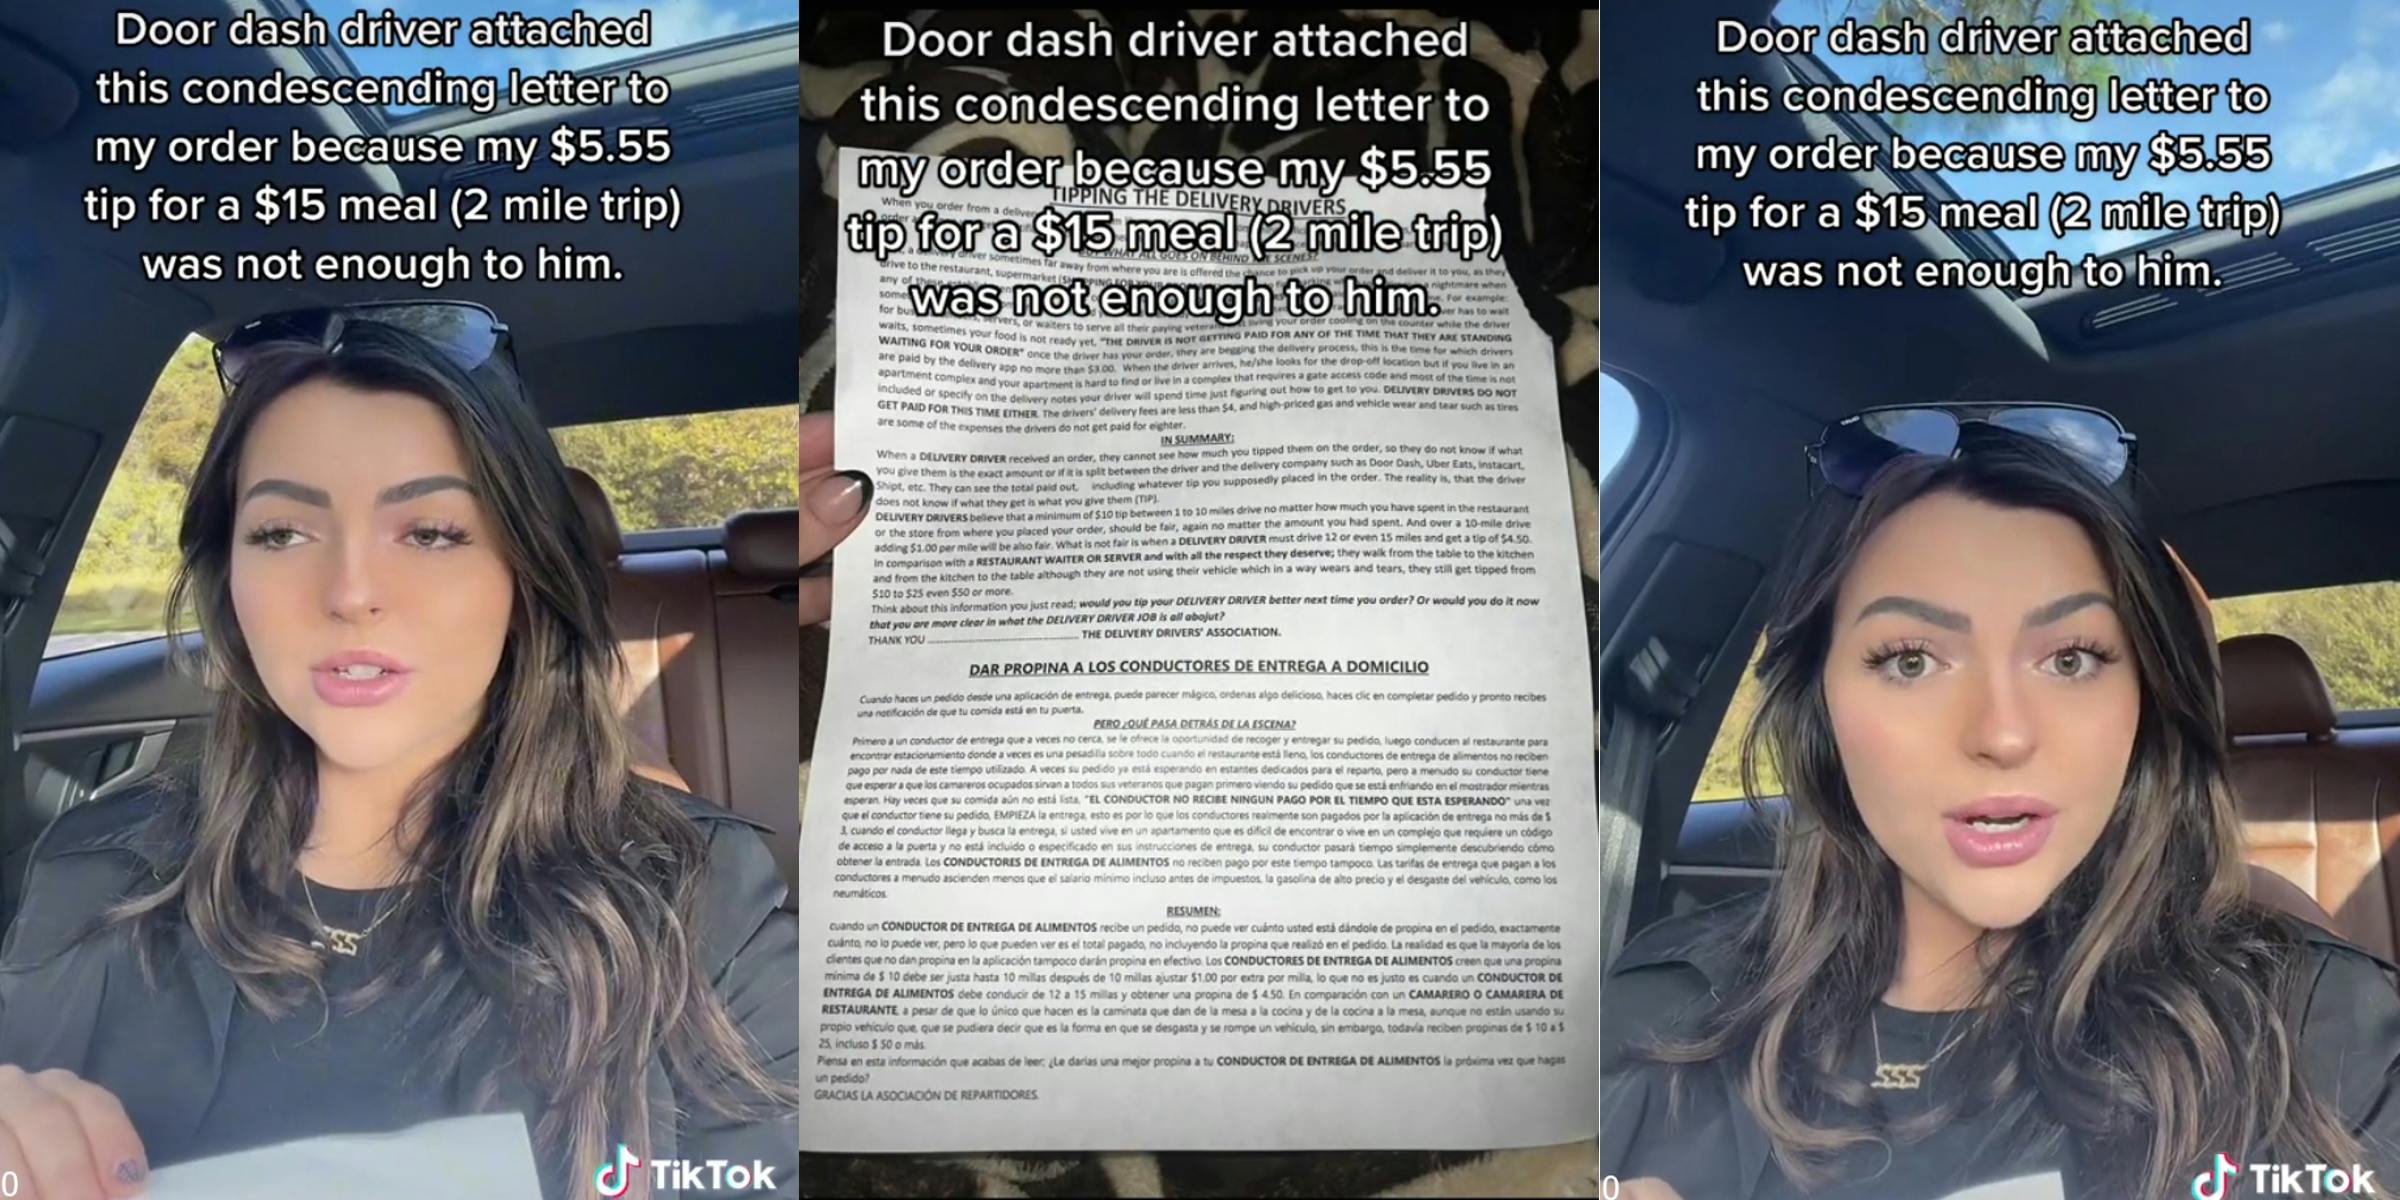 DoorDash Driver FIRED After Cursing Out Customer Over 25% Tip